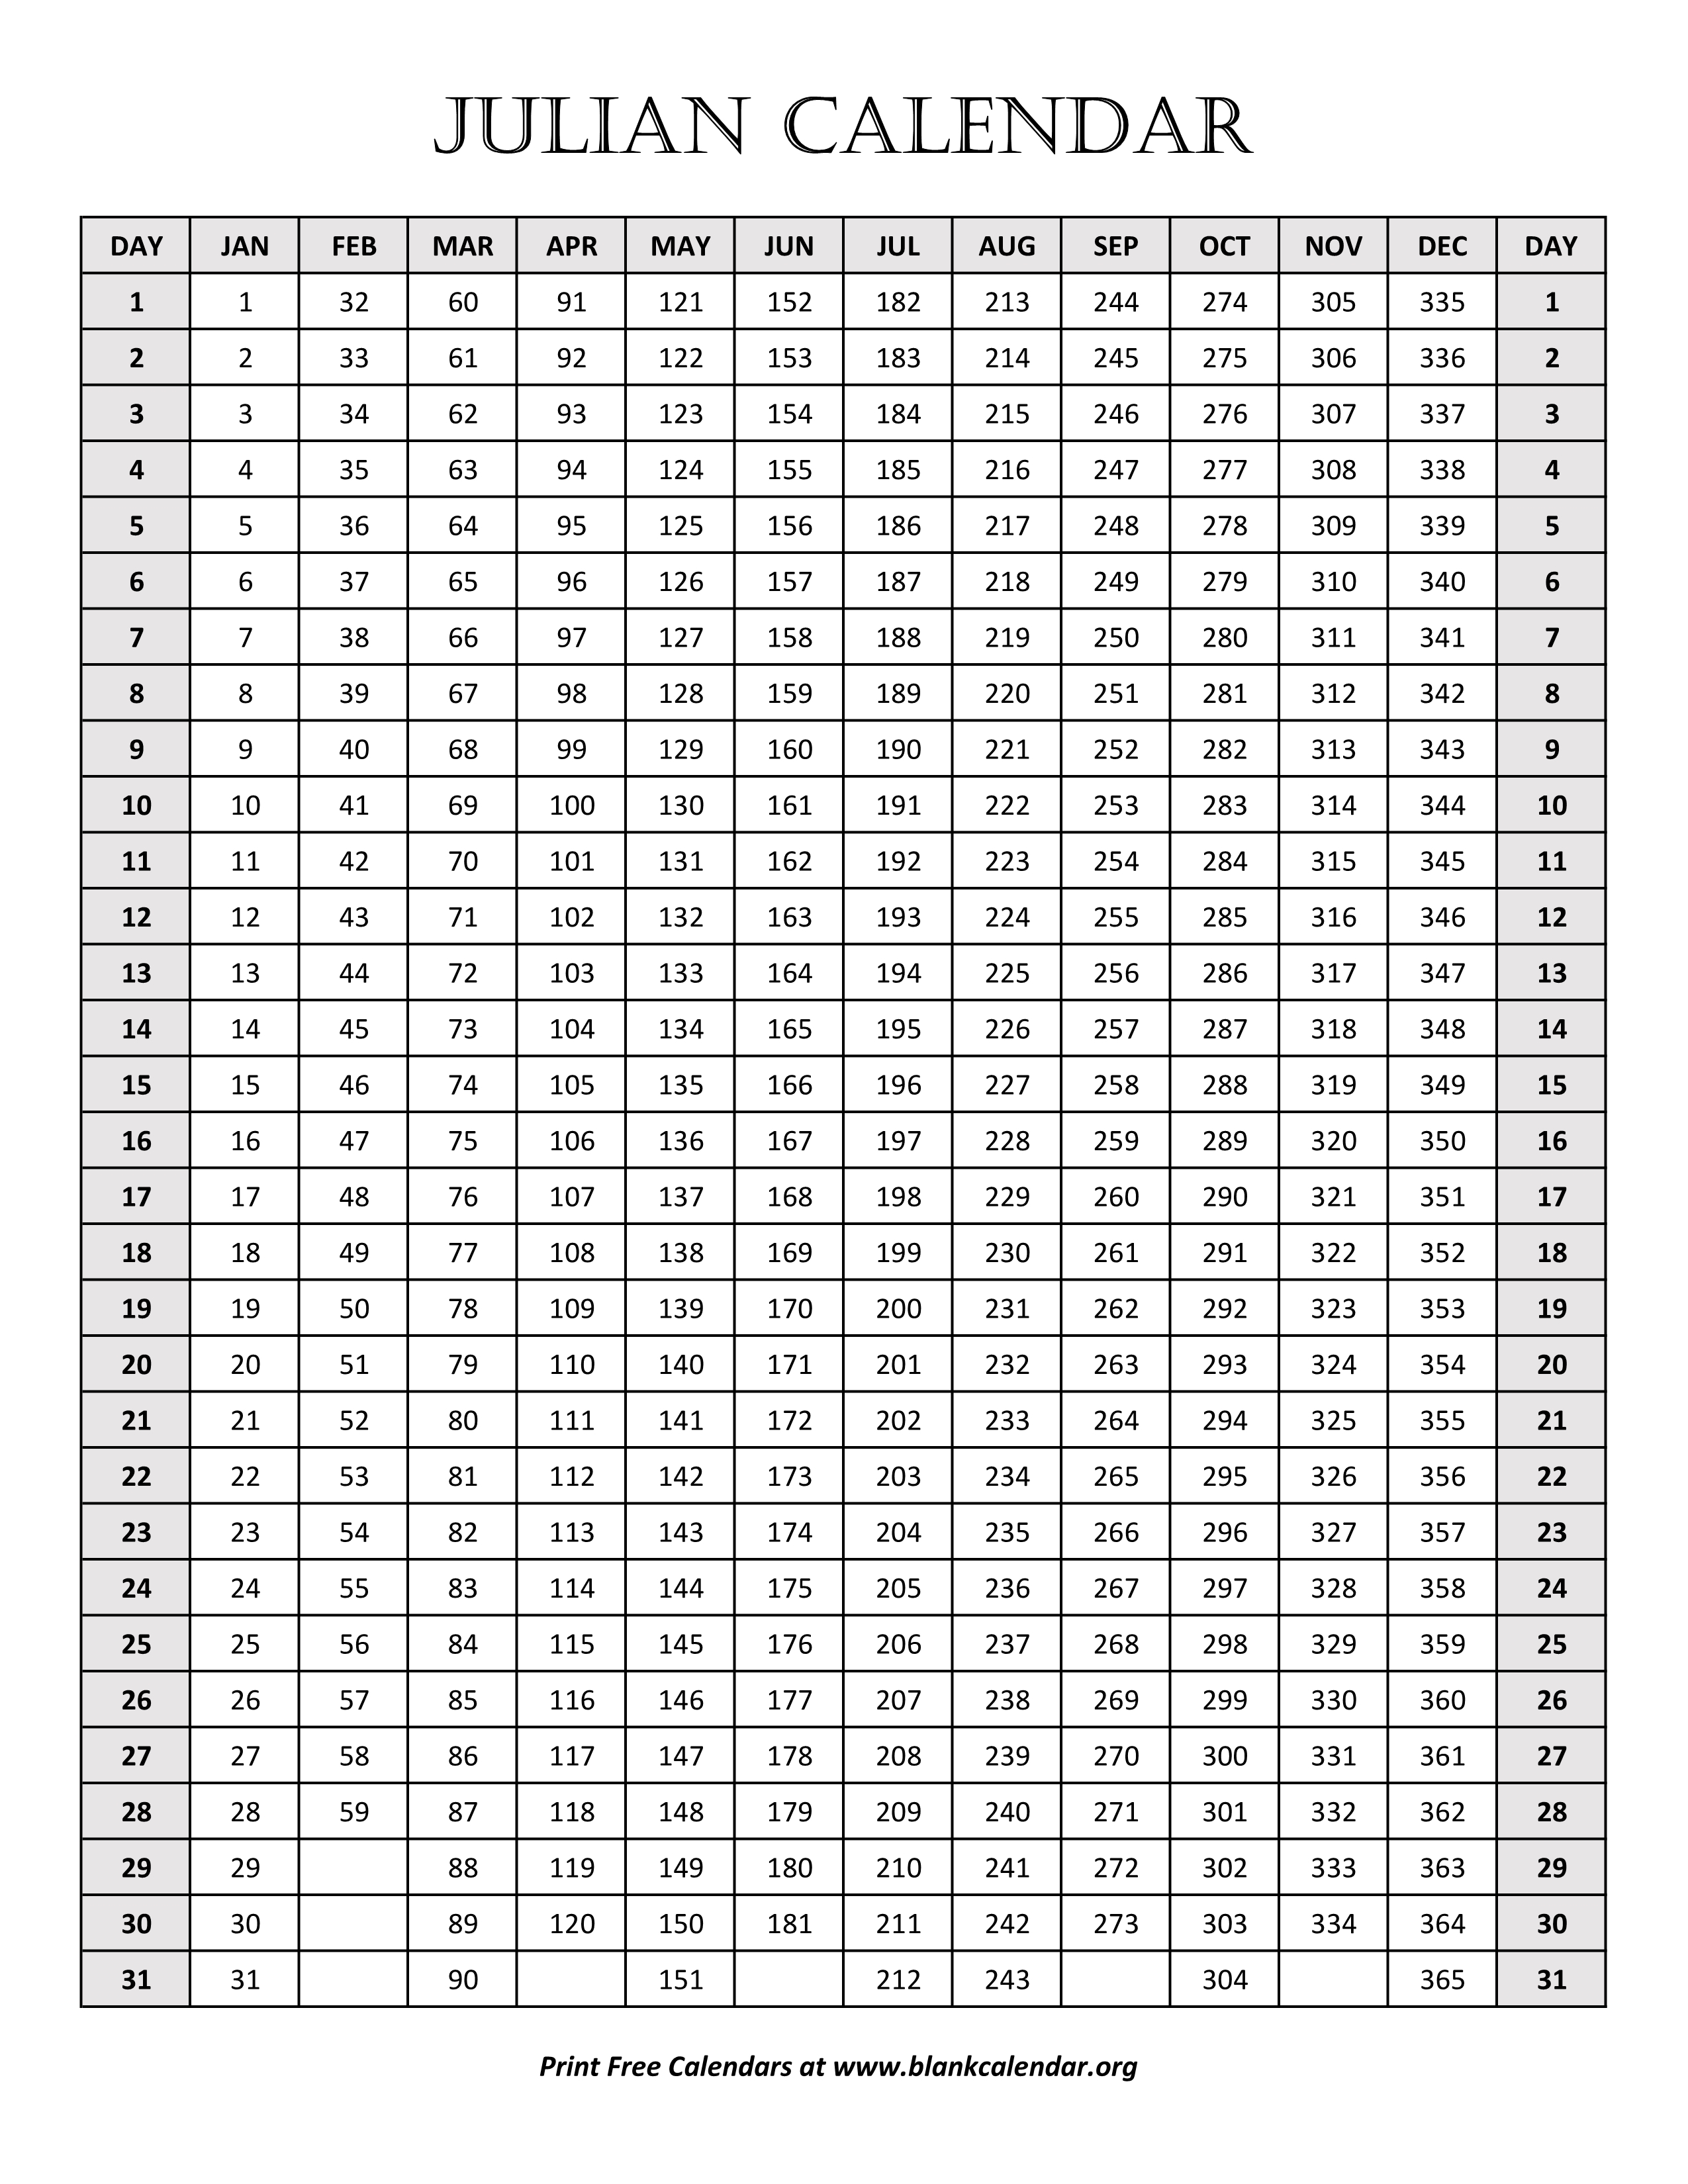 Julian Date Calendar Calendar Printables Calendar Pdf Calendar